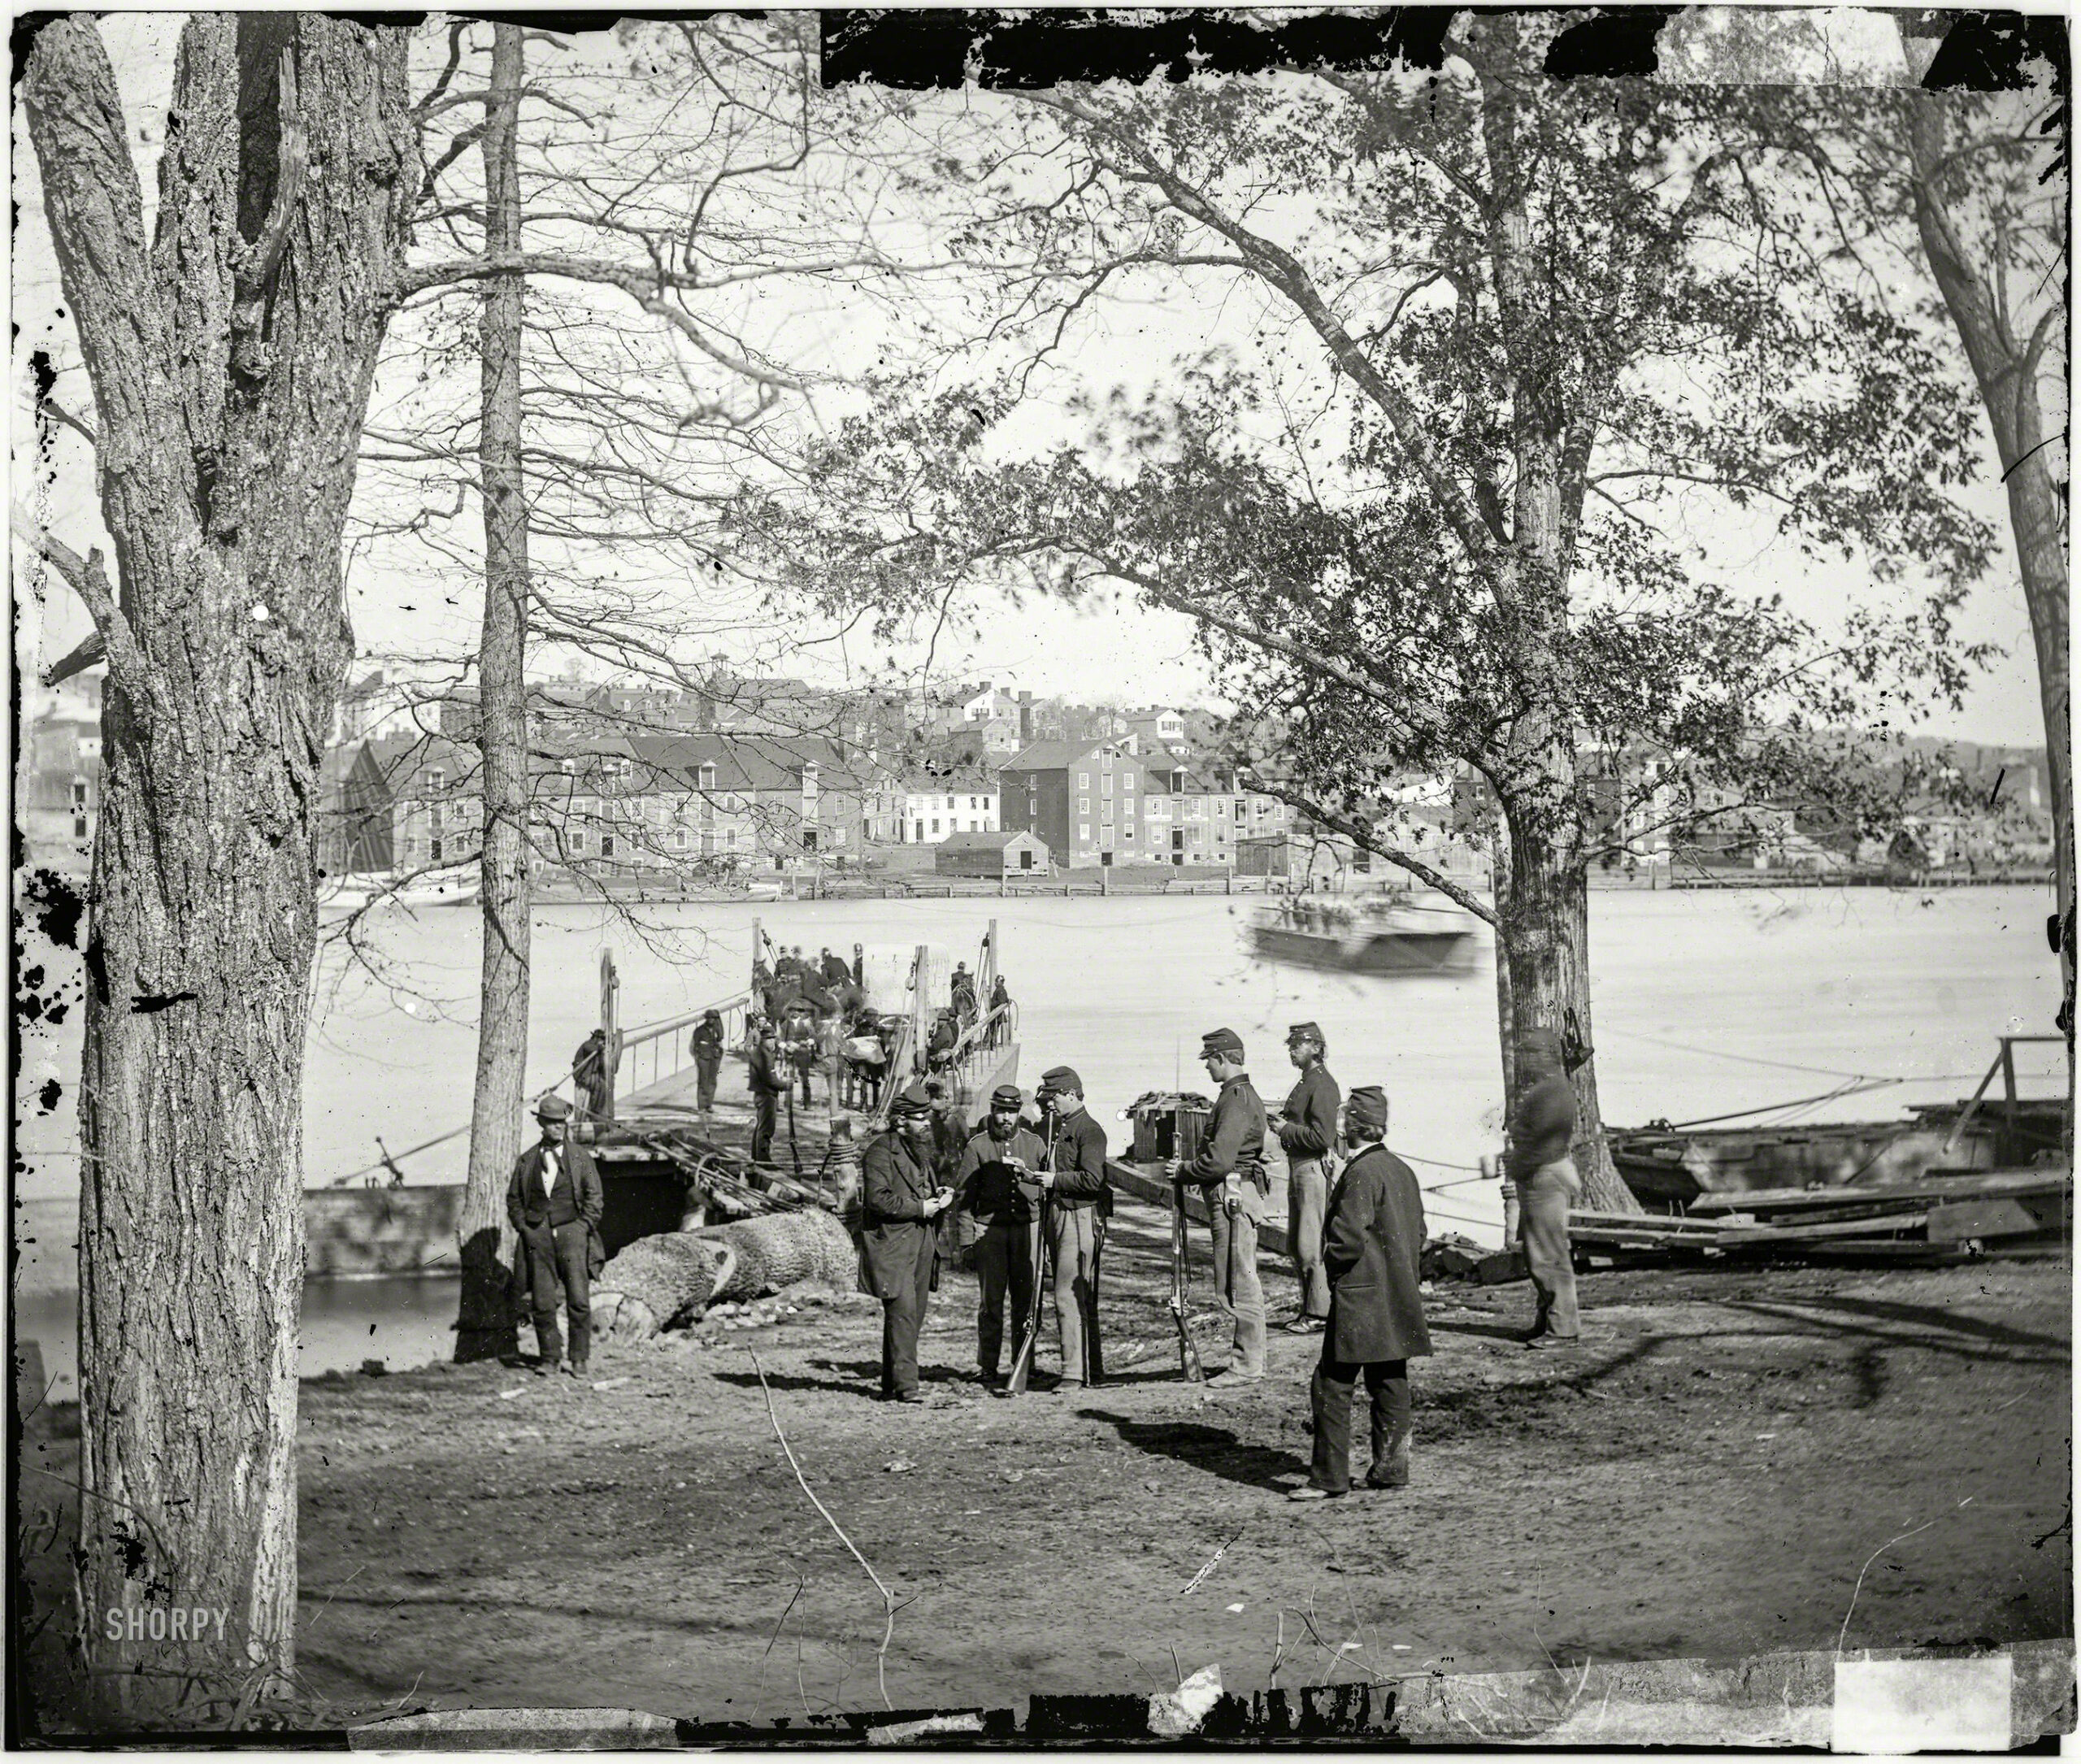 Guards at ferry landing on Mason's Island examining a pass, Washington, D.C., 1861